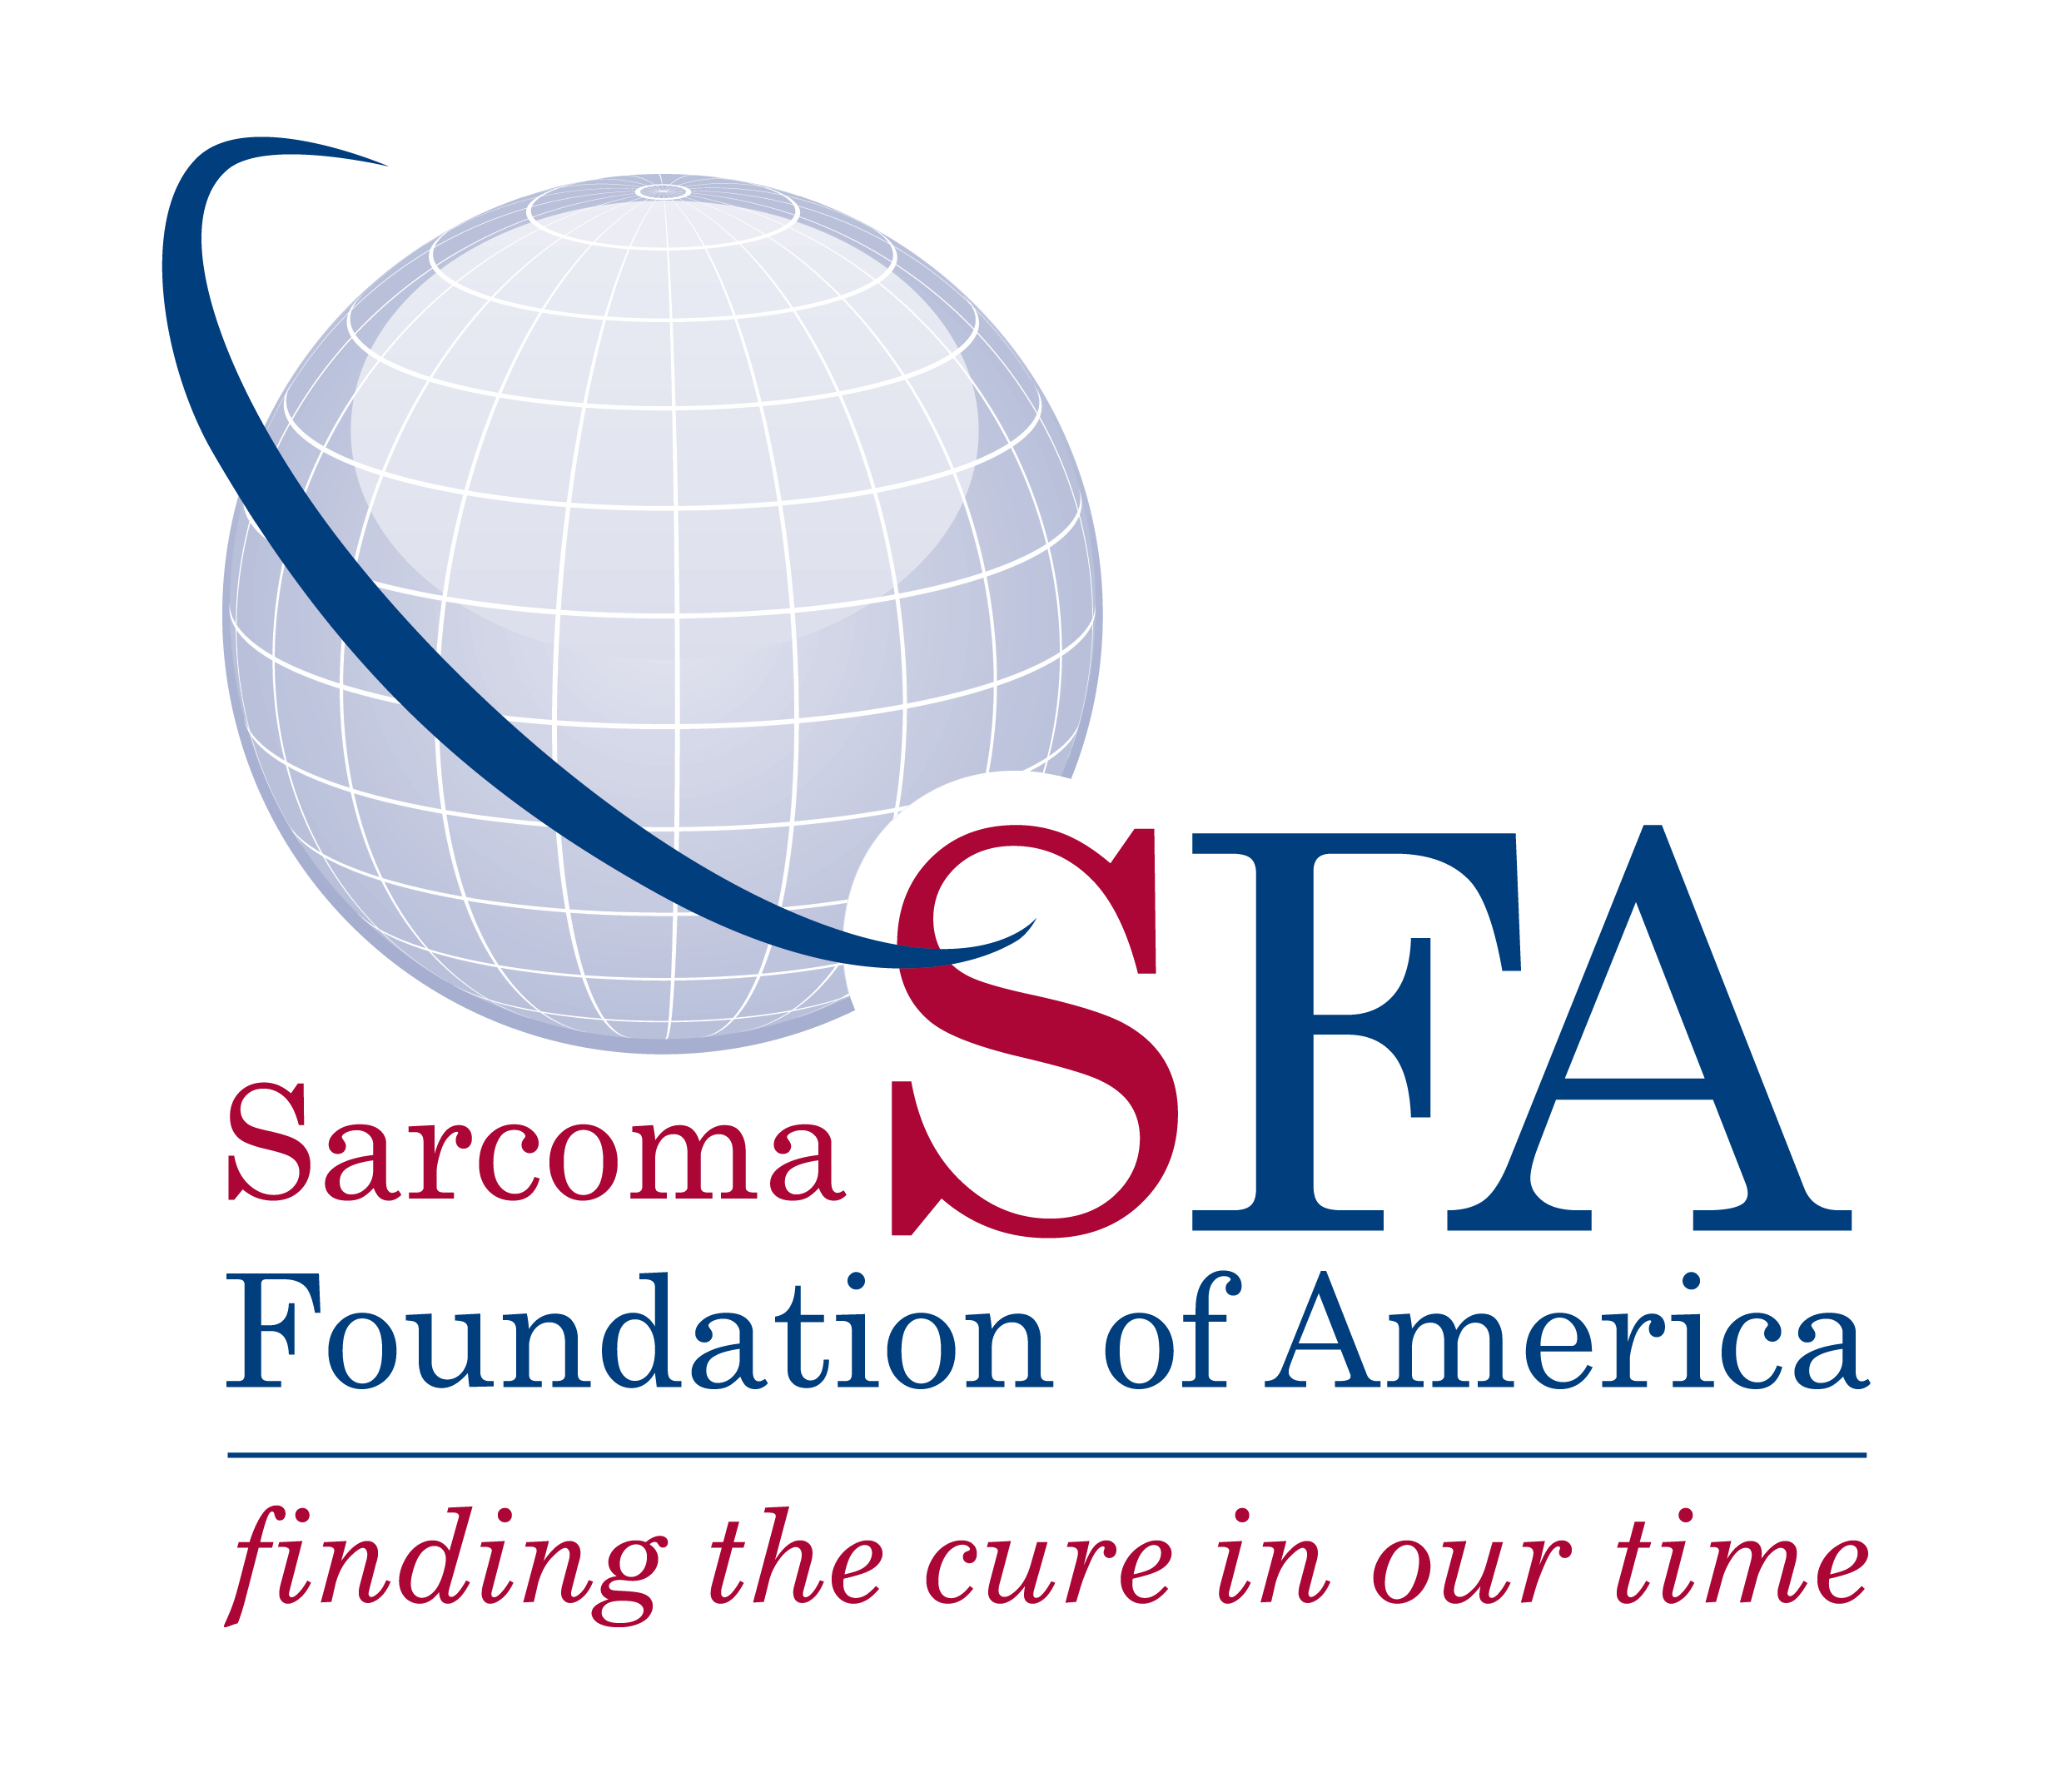 sarcoma cancer grant gaura de vierme pentru giardia la om